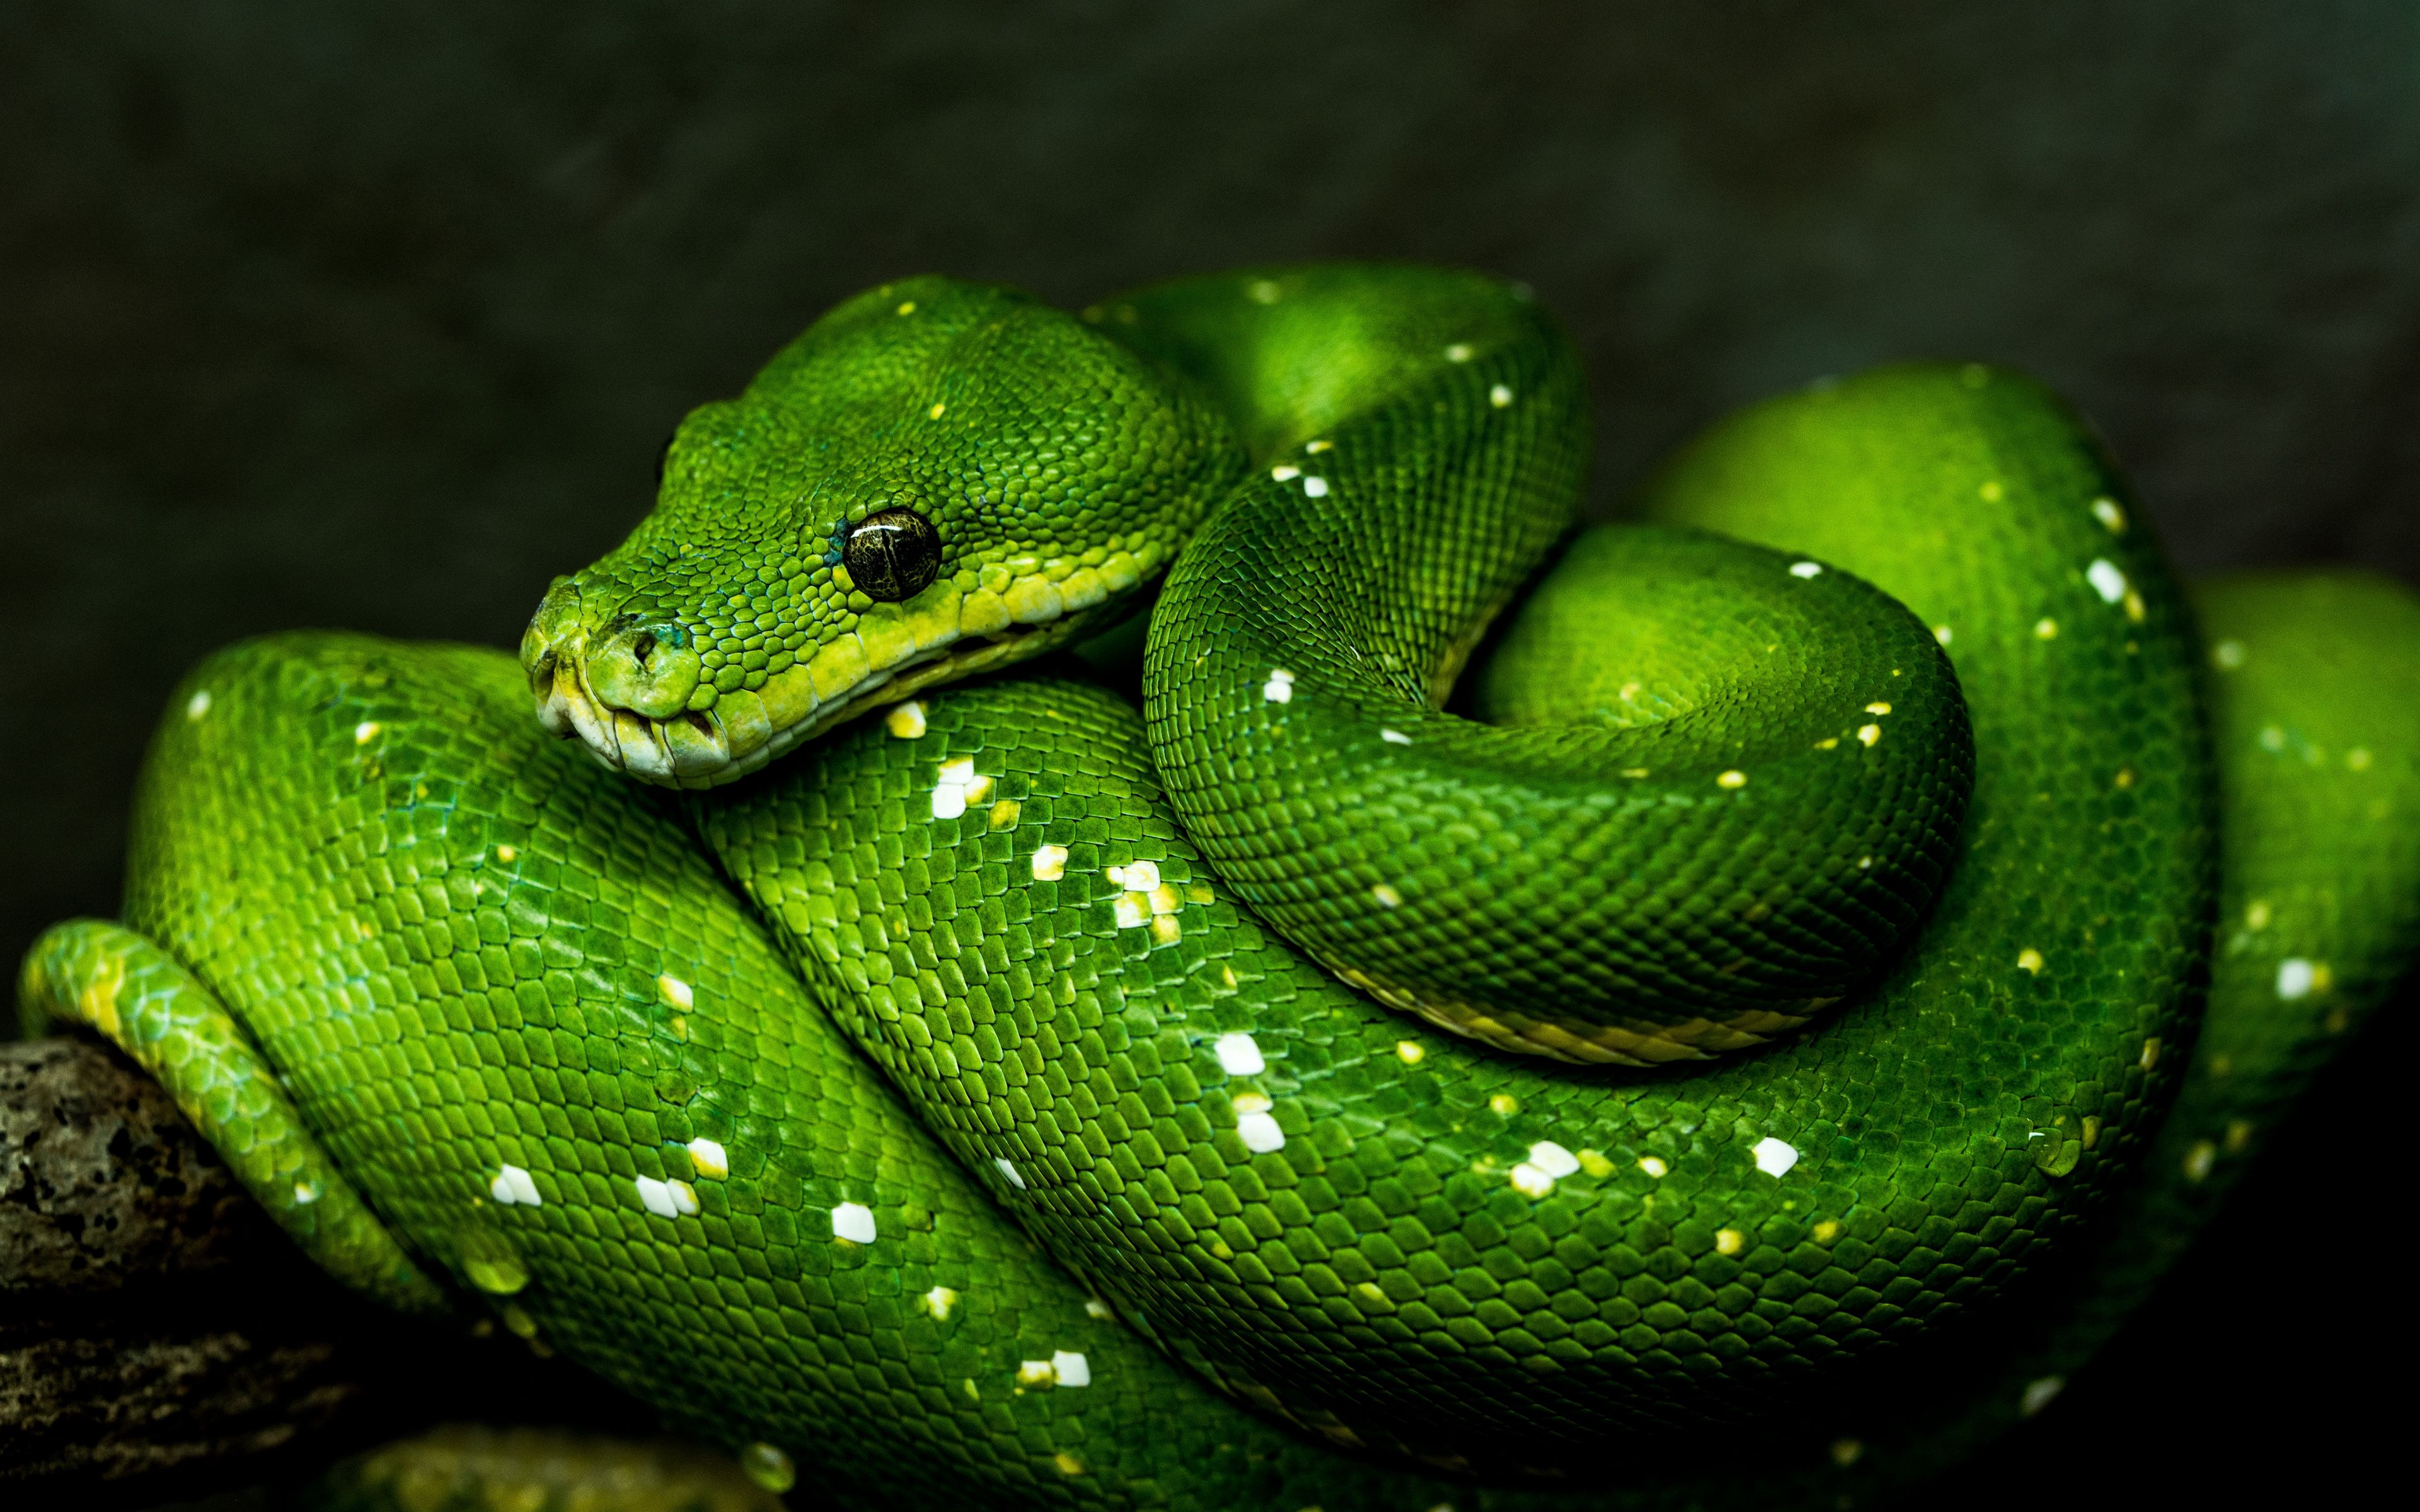 Wallpaper ID: 24262 / snake, reptile, wildlife, 4k free download